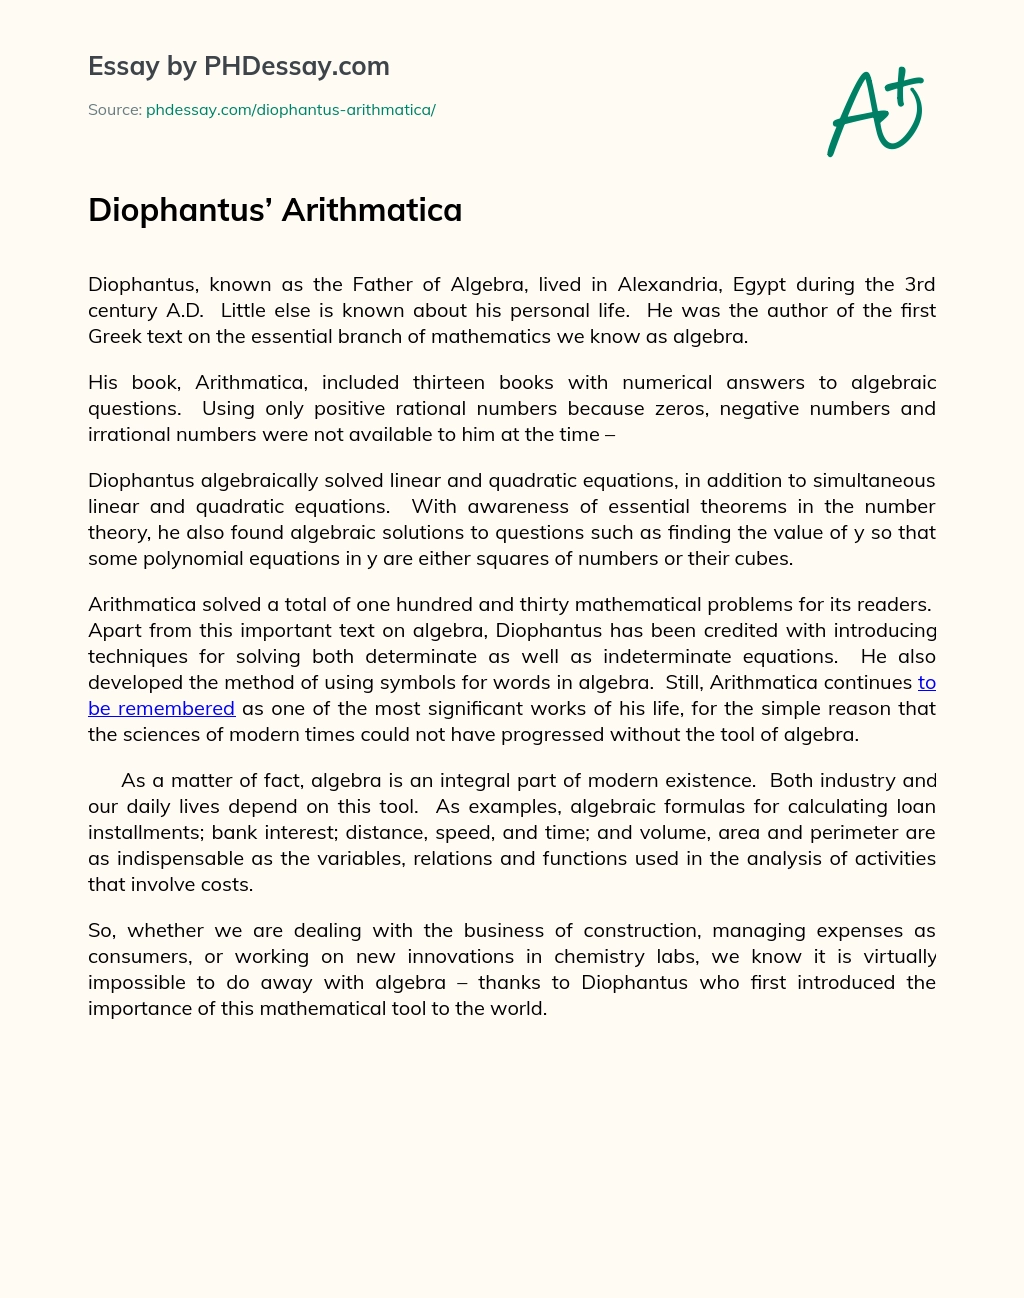 Diophantus’ Arithmatica essay